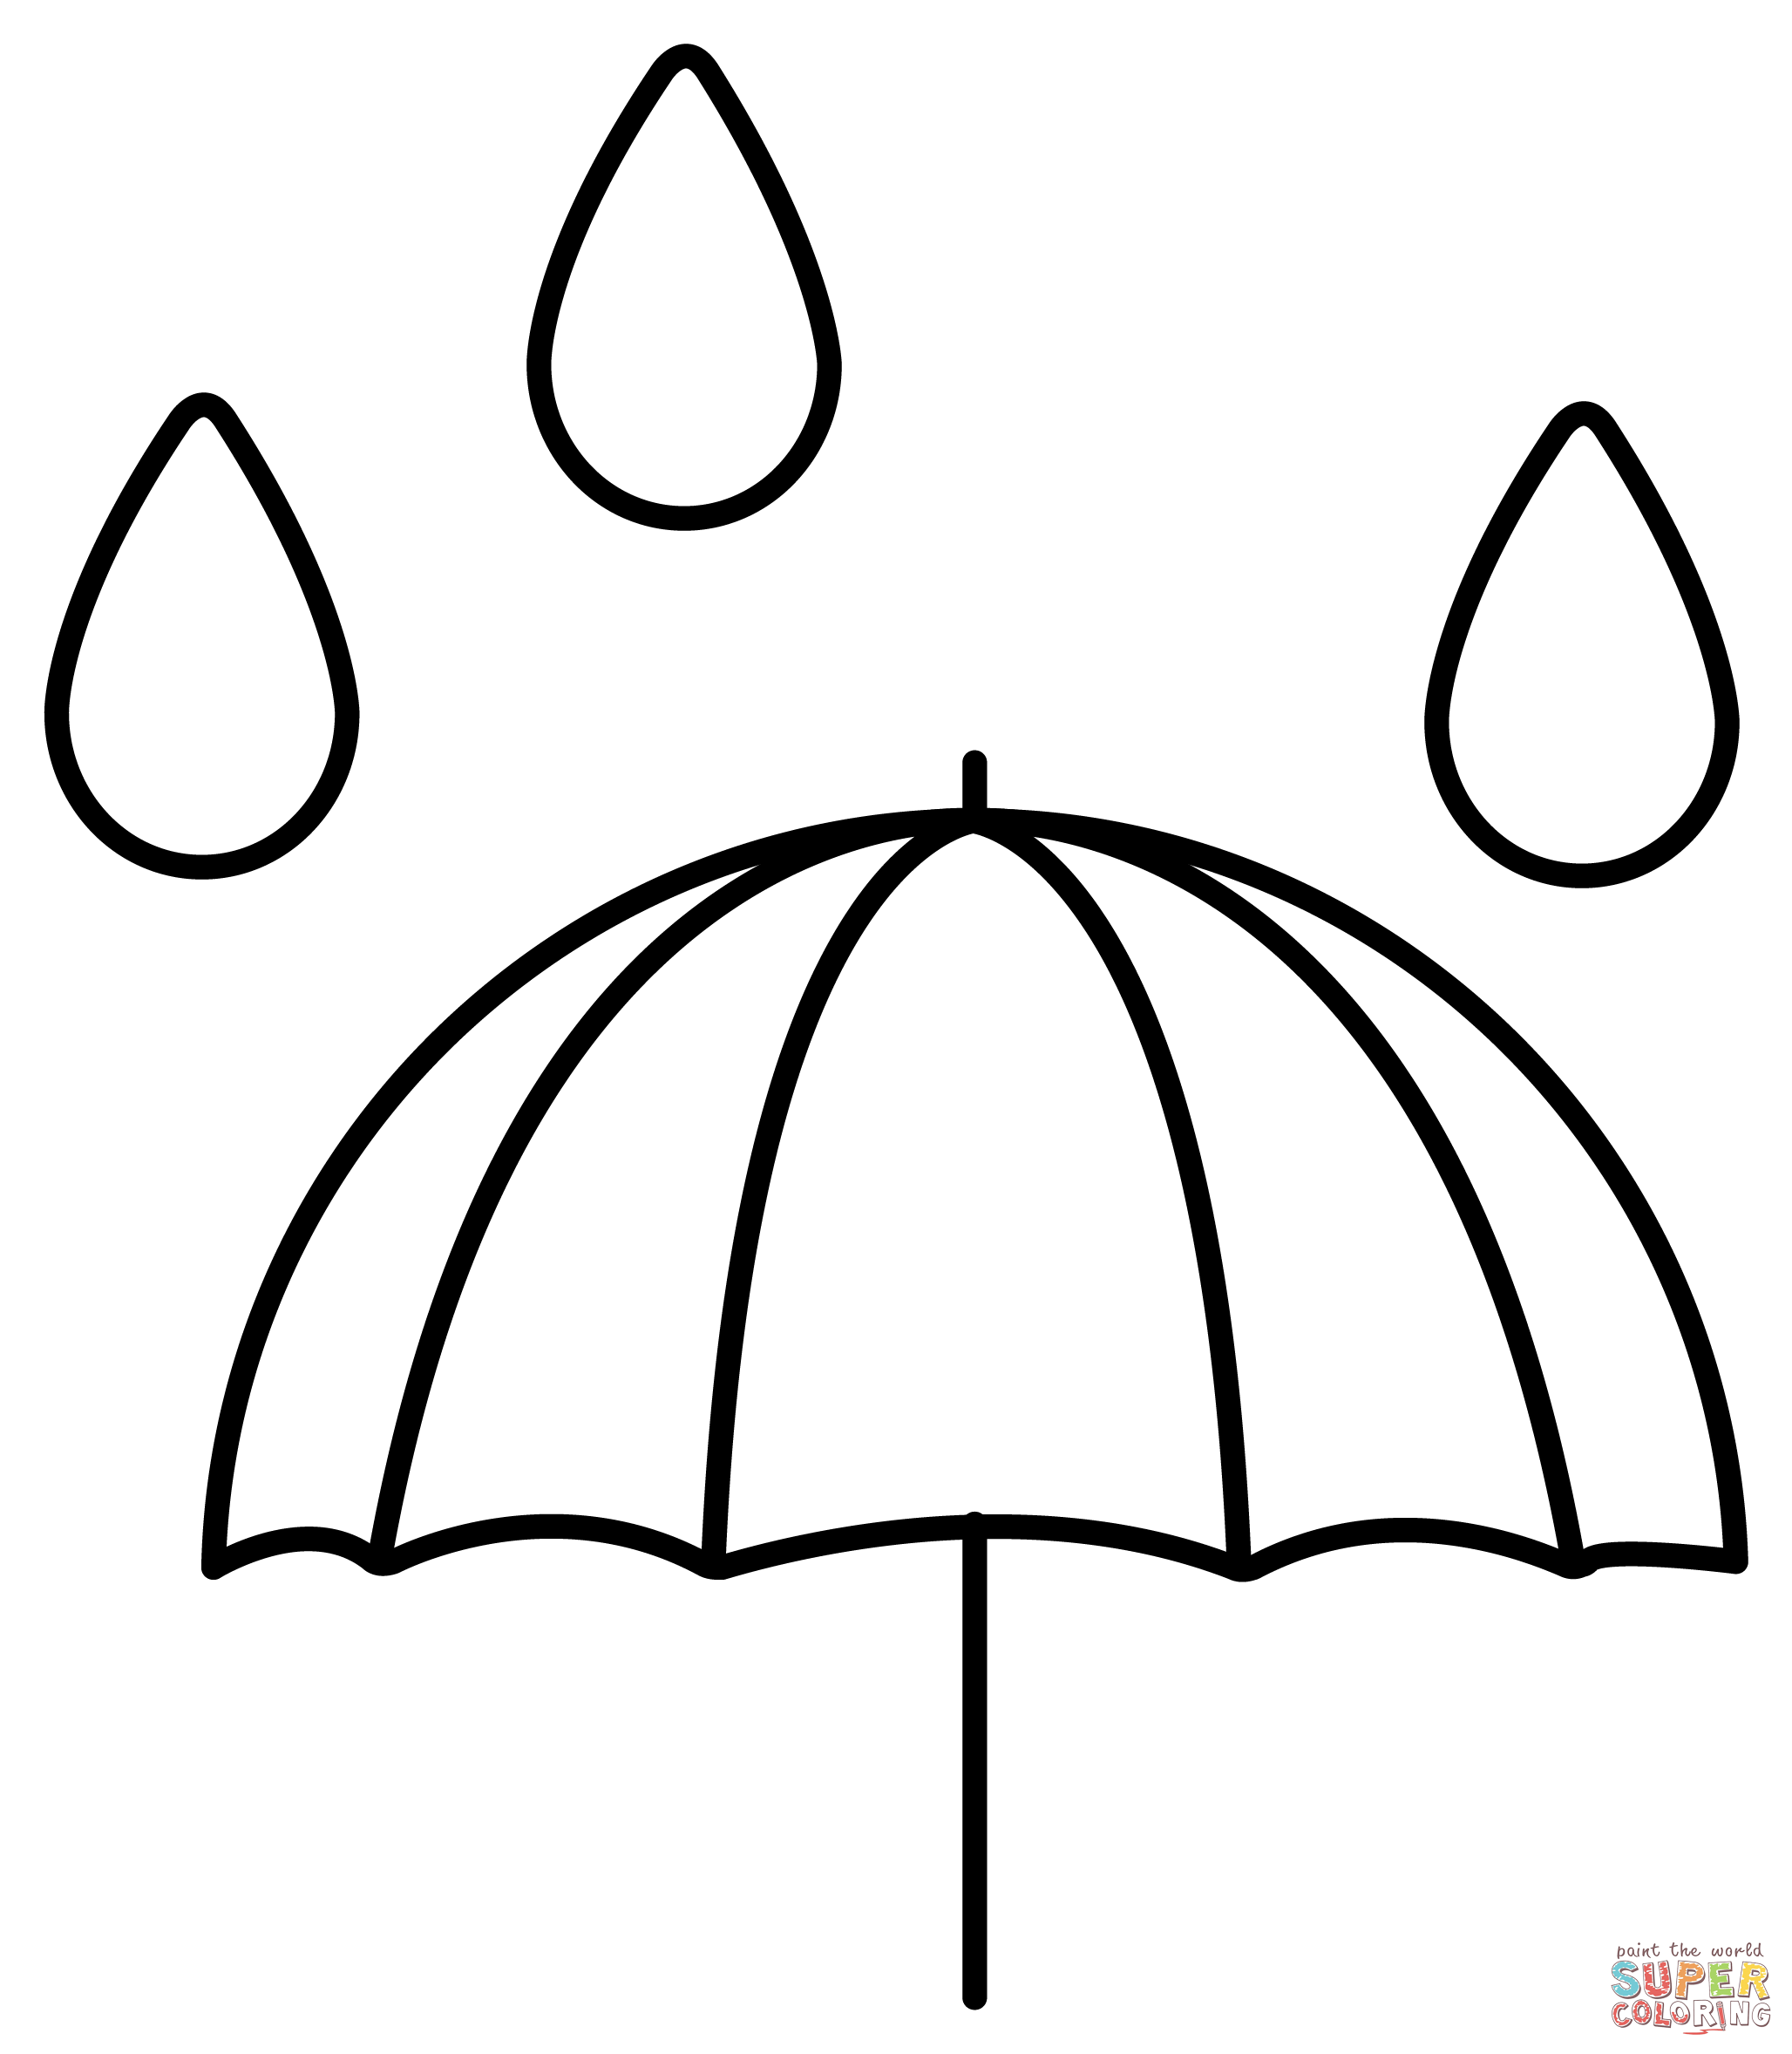 Umbrella with rain drops emoji coloring page free printable coloring pages